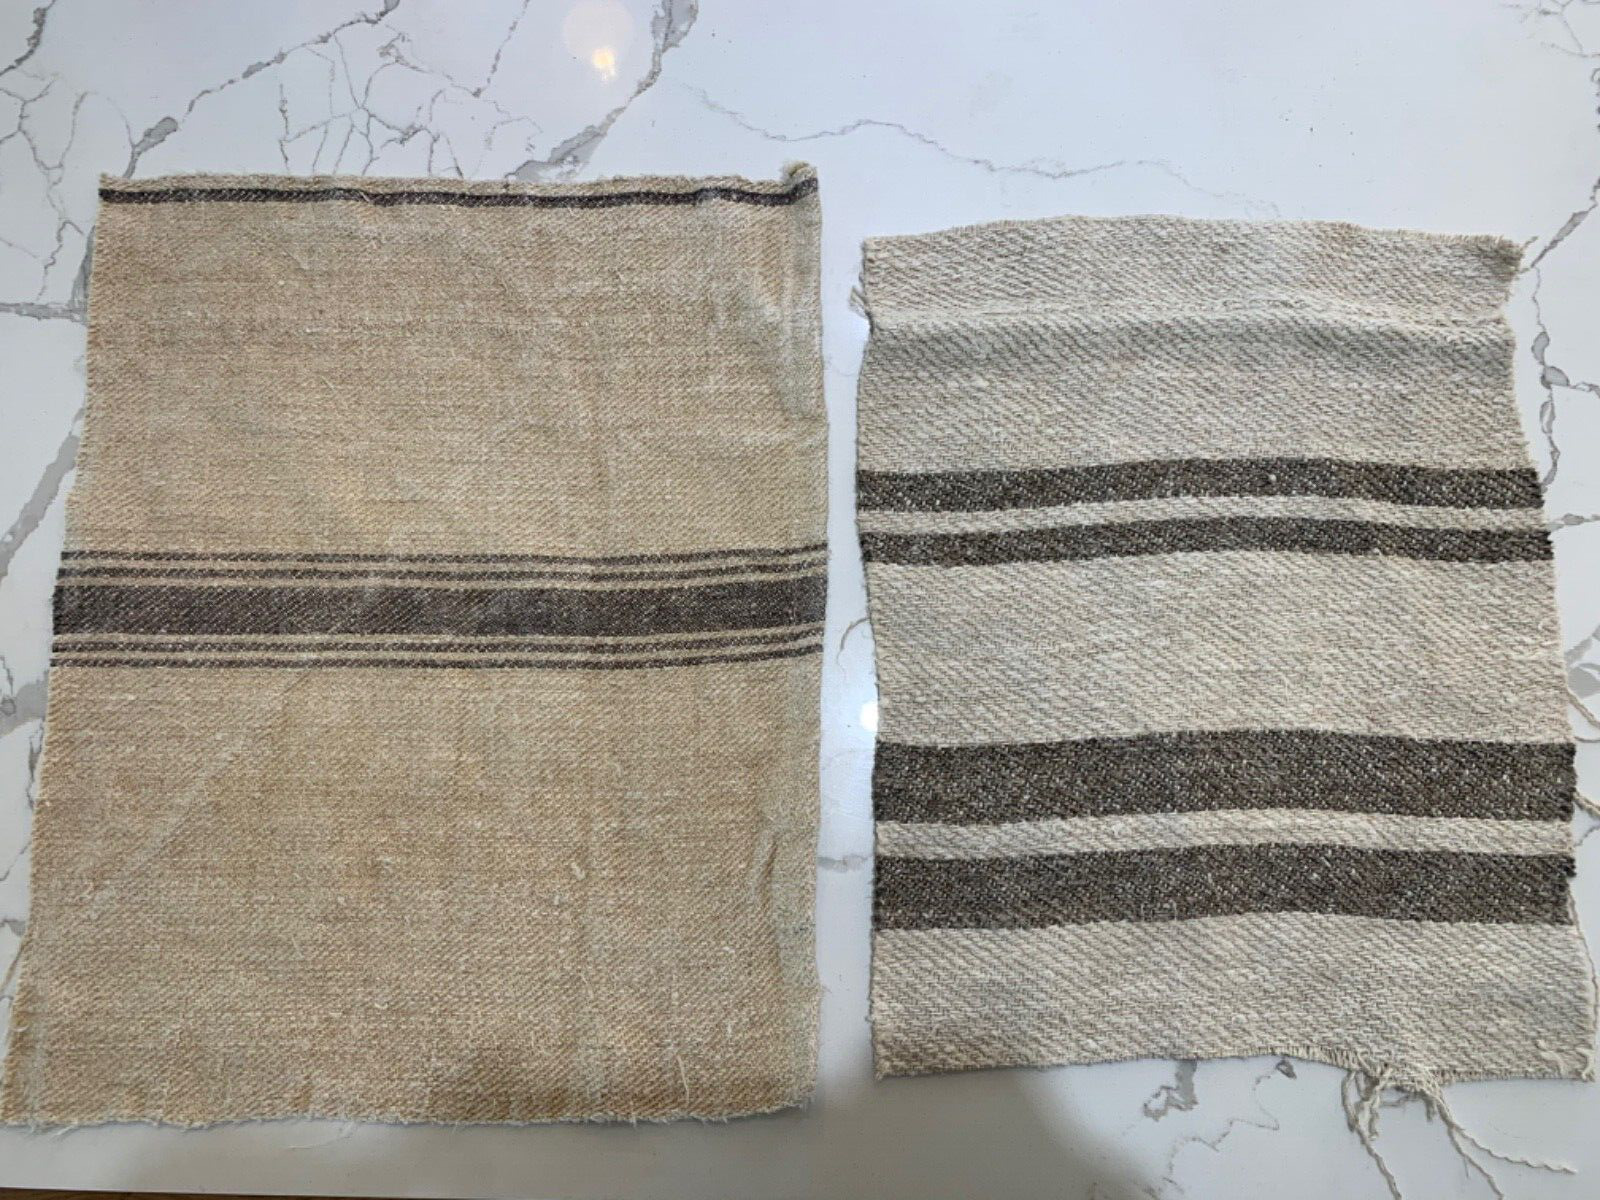 Vintage Linen fabric Handmade European Grain Sack Yardage Remnants 18x14, 16x13